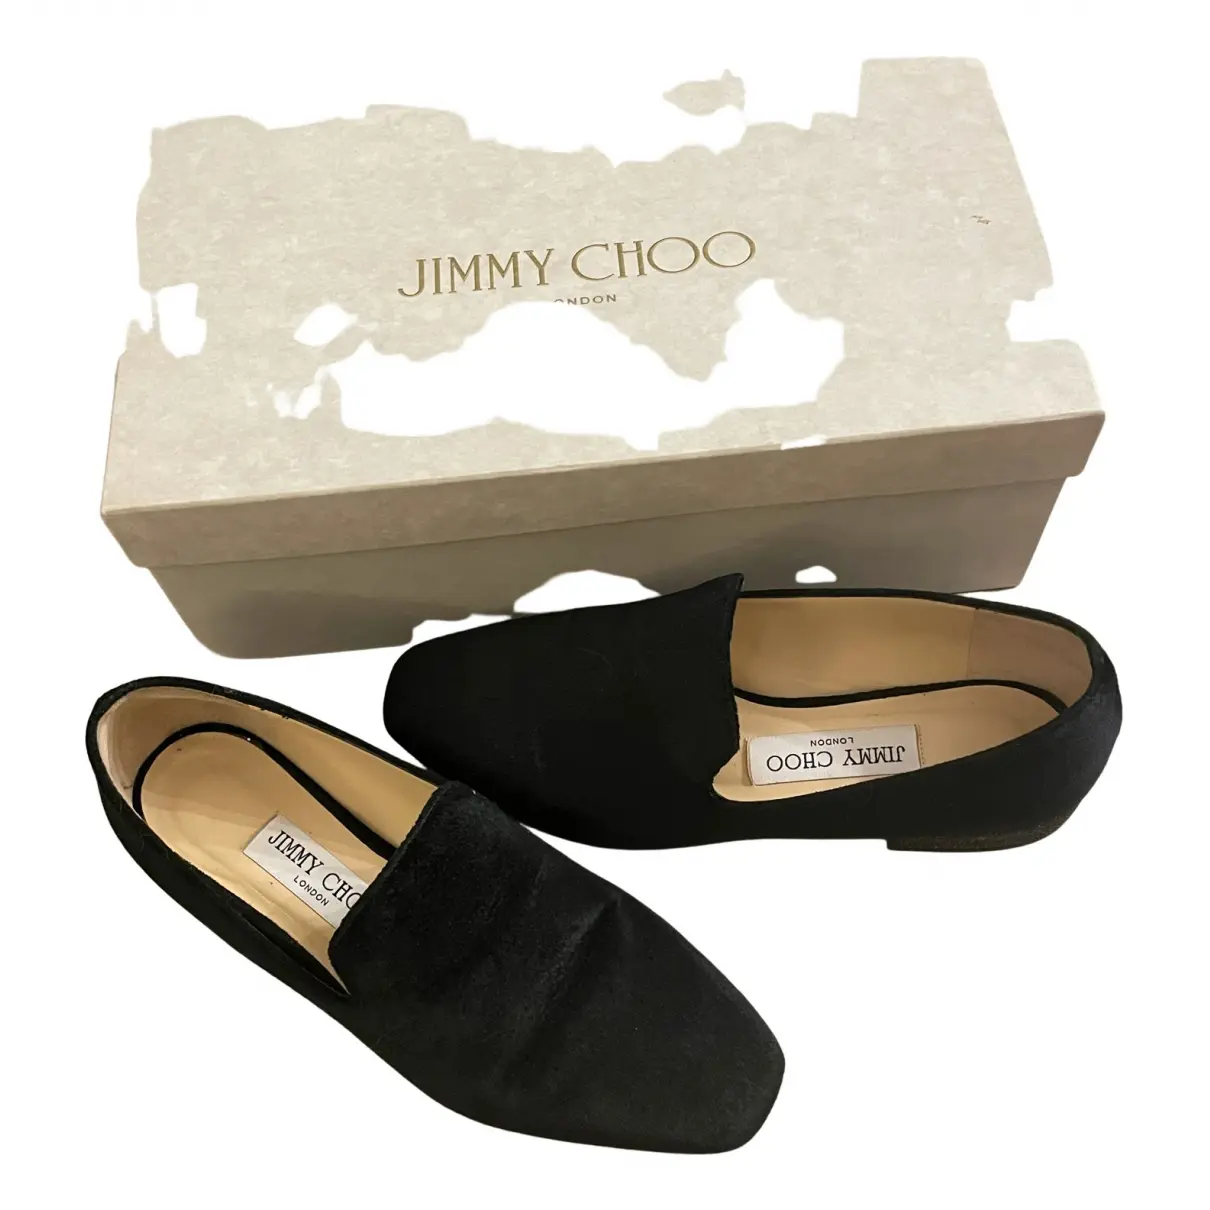 Buy Jimmy Choo Pony-style calfskin flats online